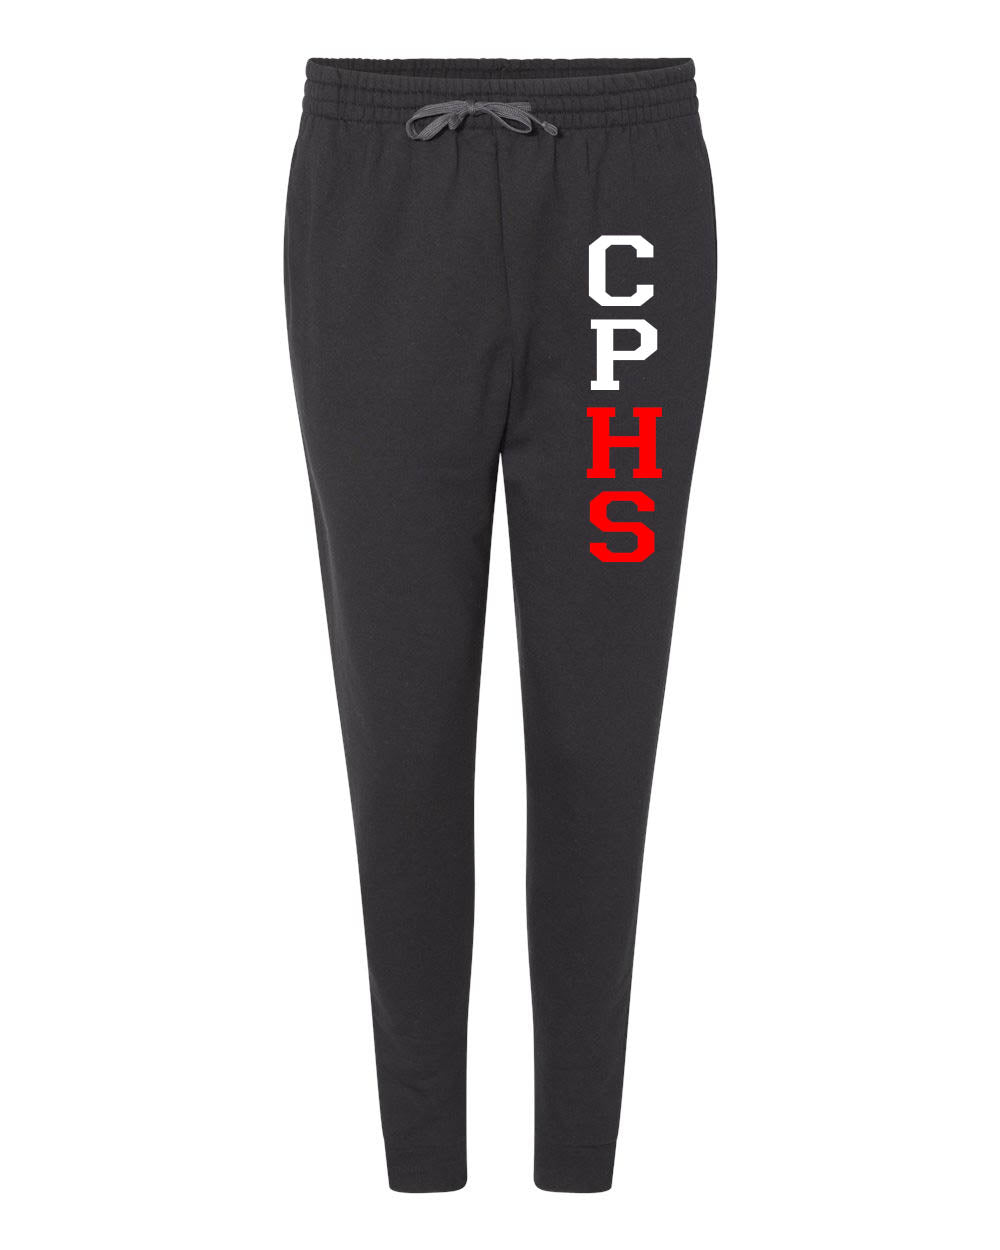 CPHS Sweatpants